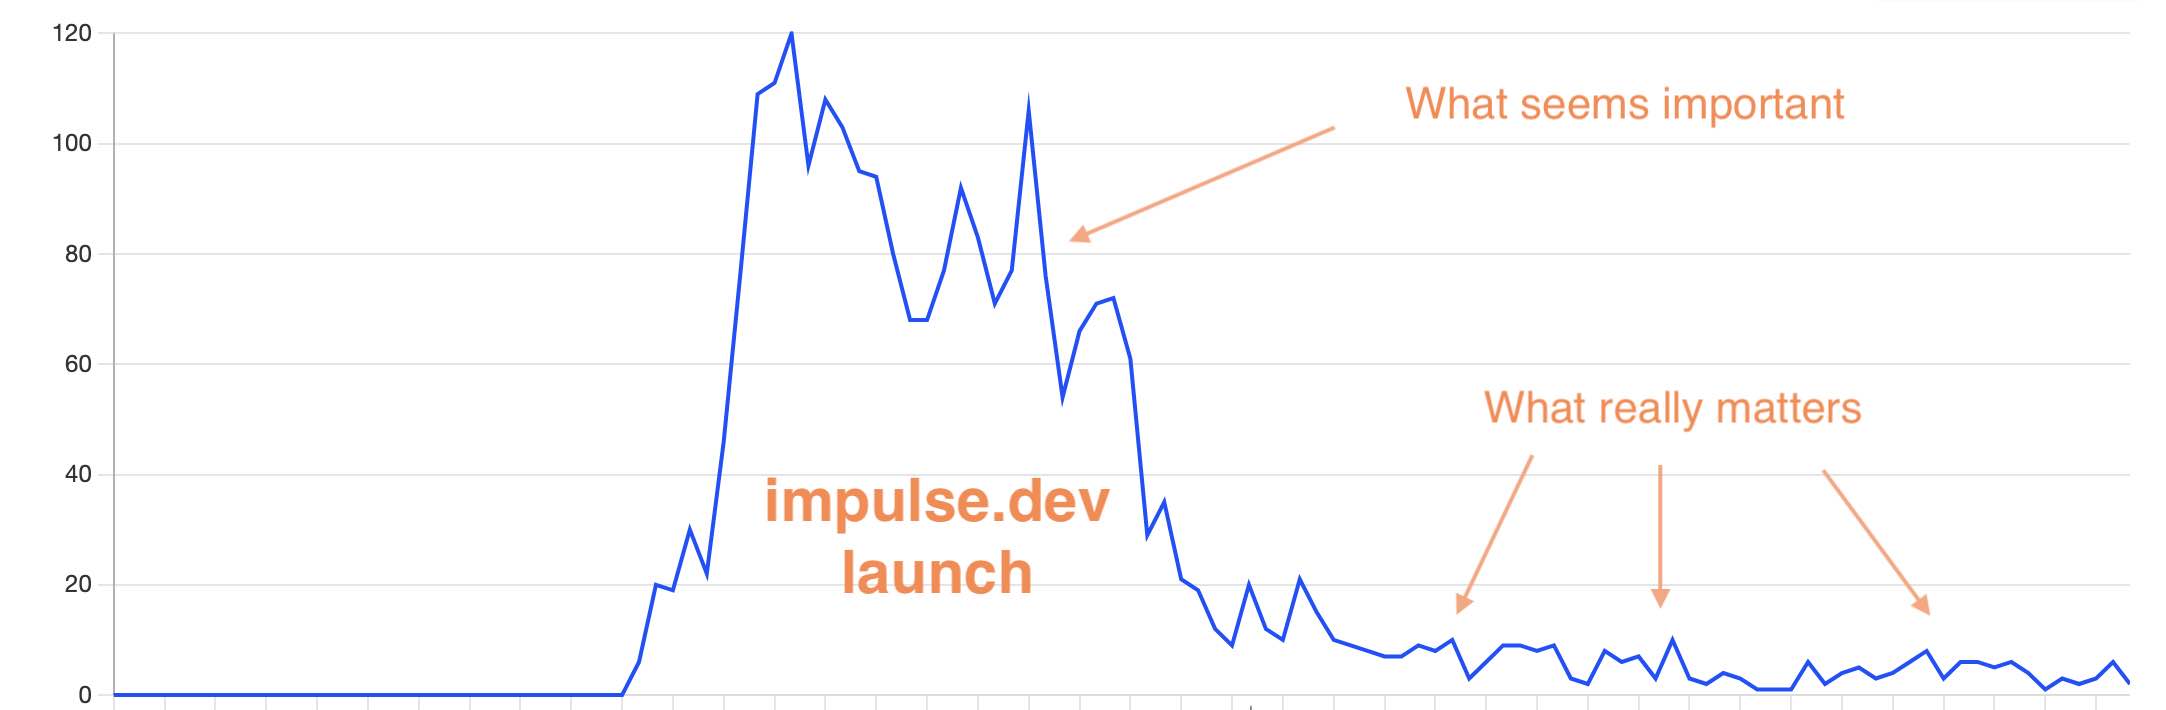 impulse.dev page view graph